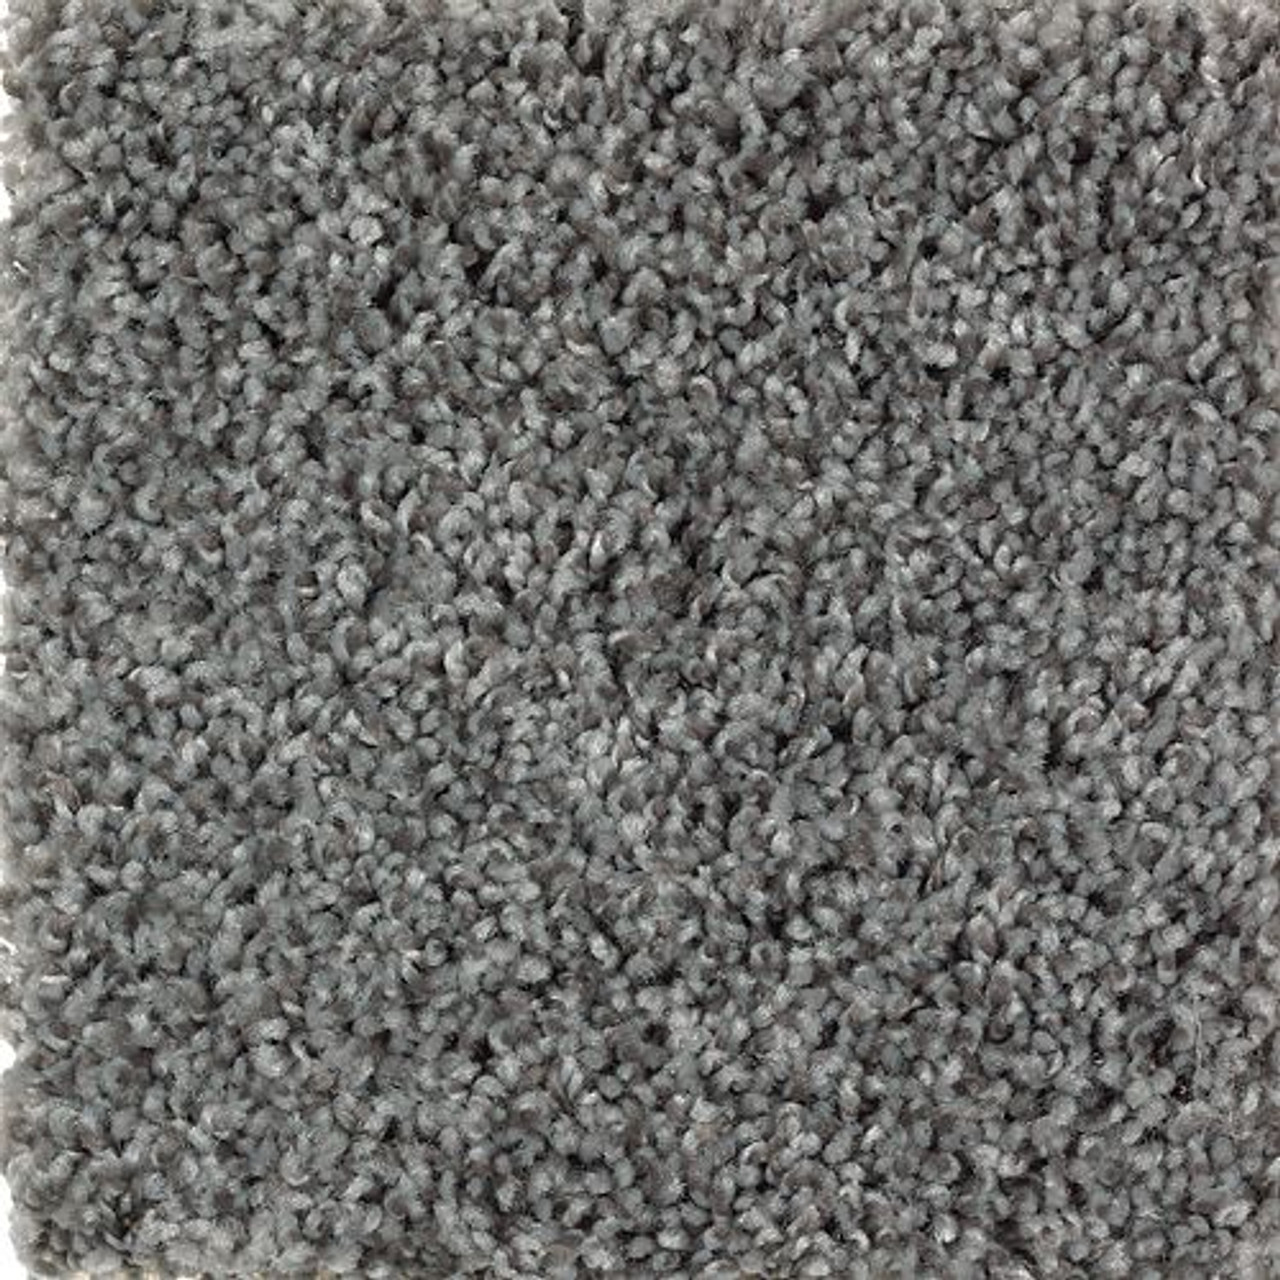 Mohawk Smart Cushion - High Quality Carpet Pad